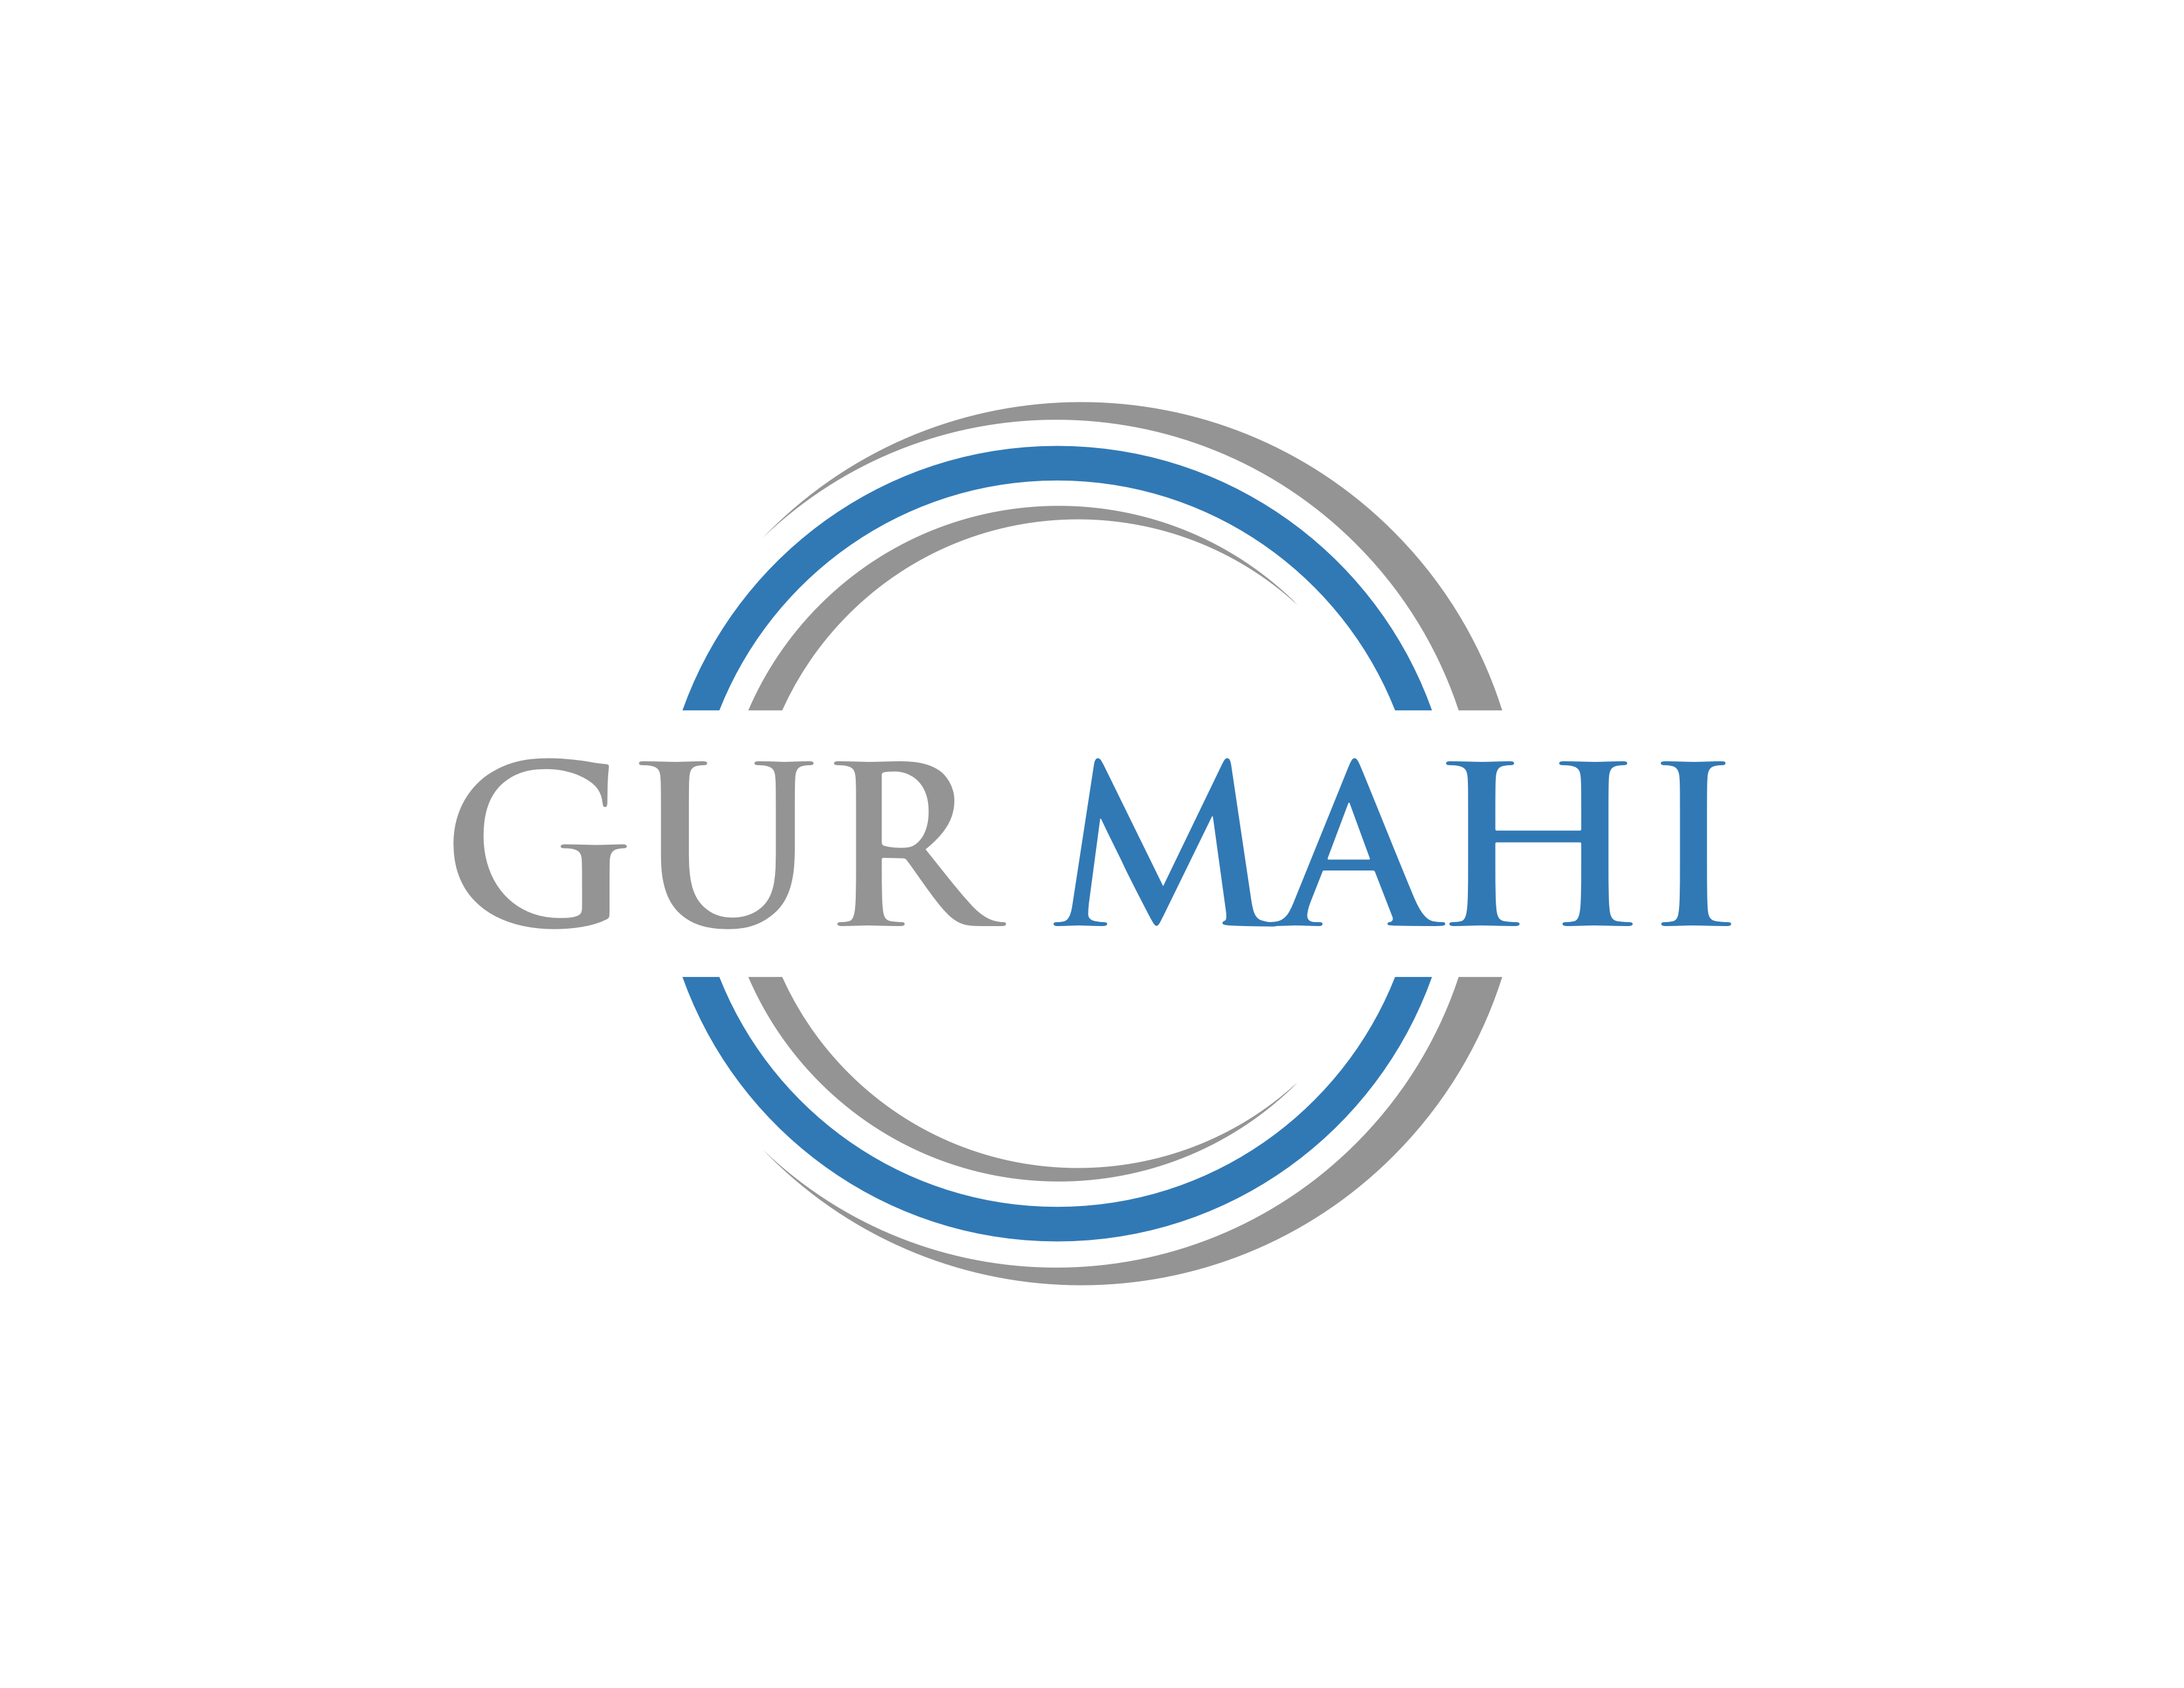 Mad Mahi logo by graphicwolf on DeviantArt